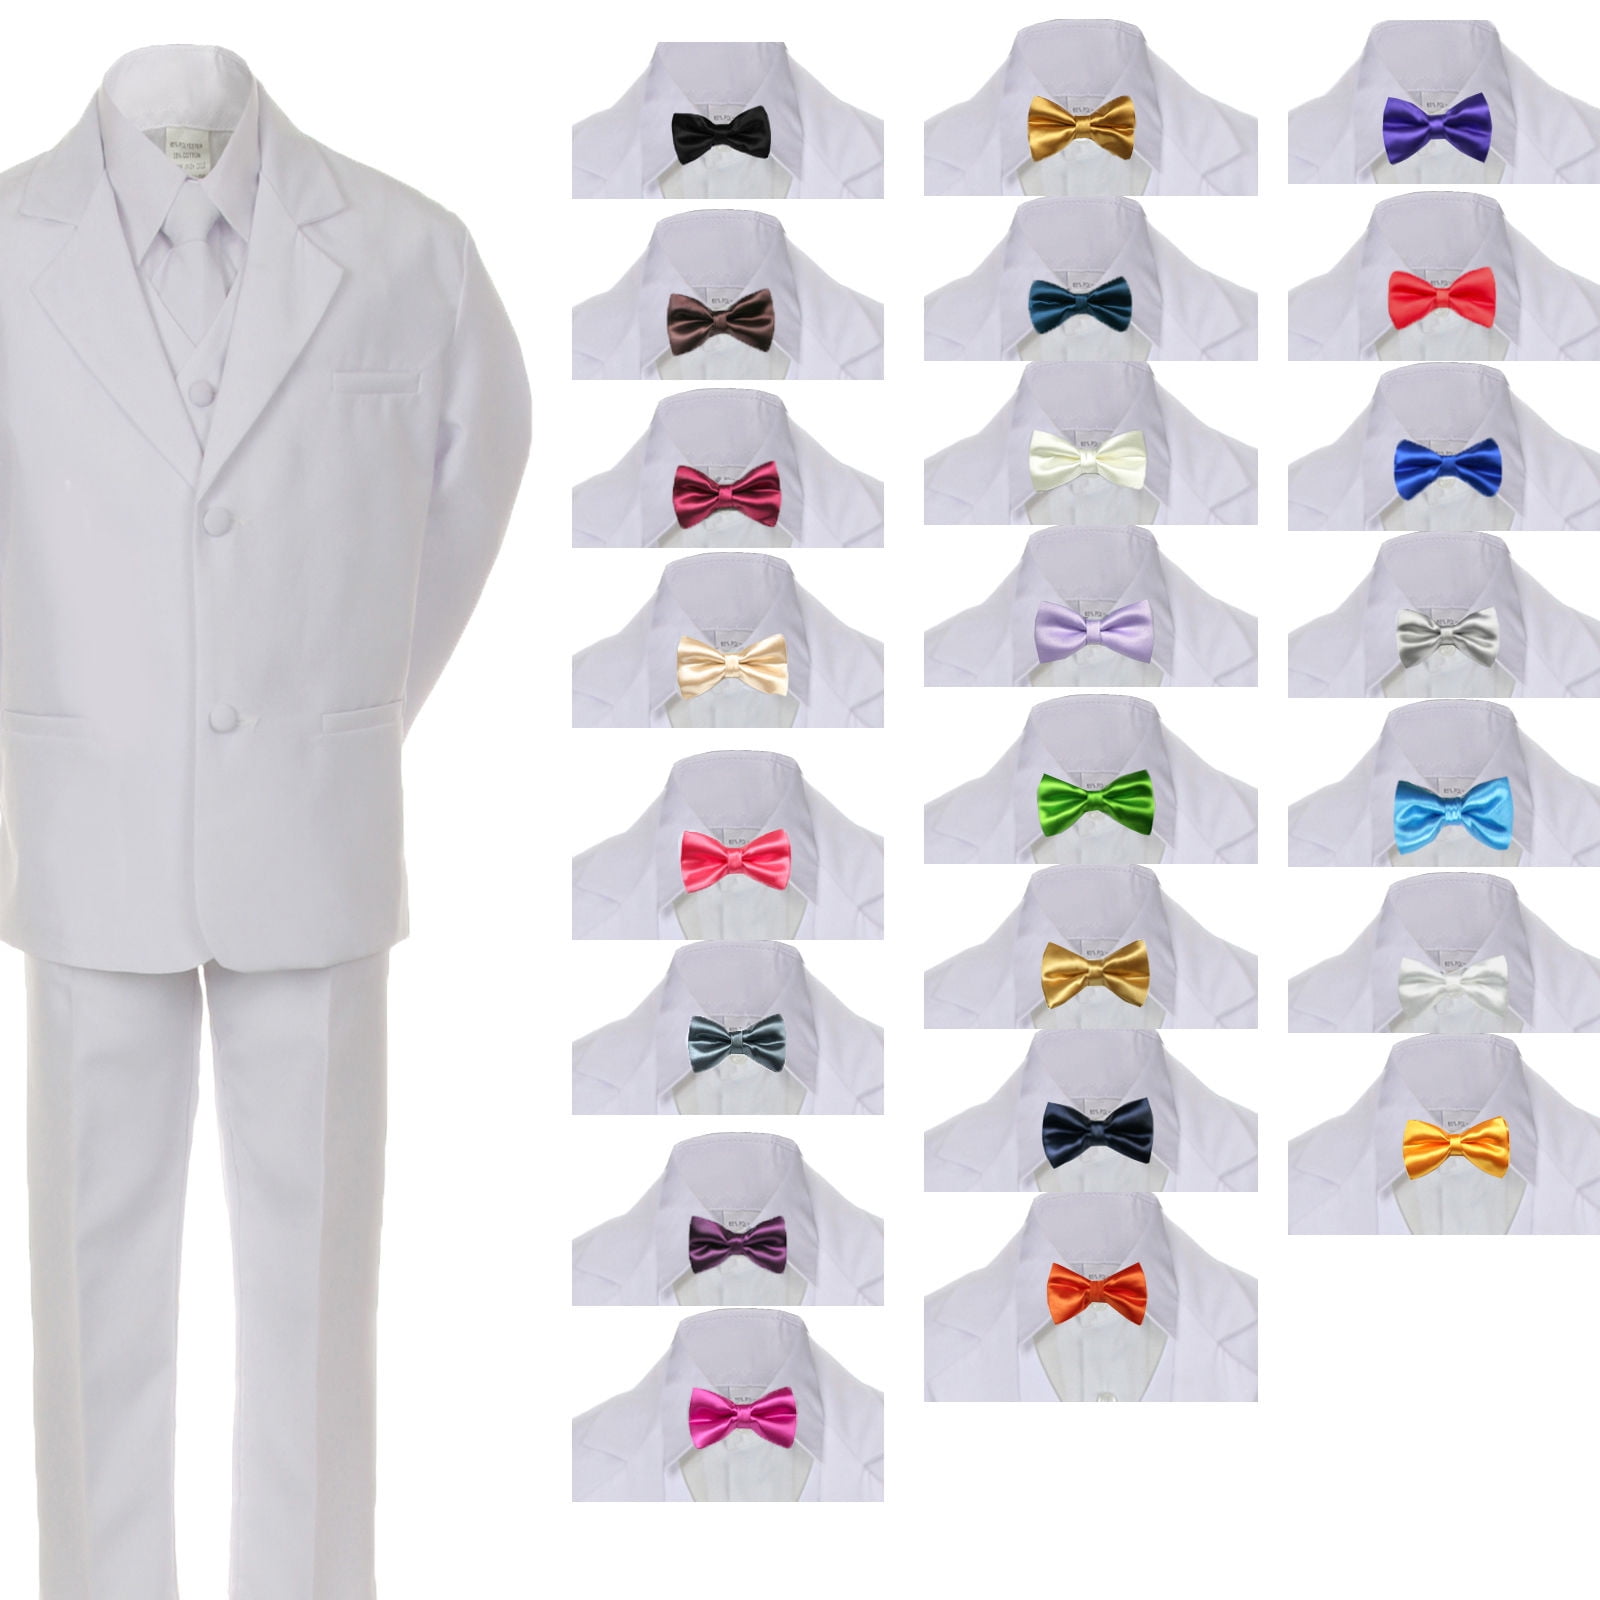 7pc Baby Toddler Boy White Formal Wedding Party Suit Tuxedo Vest Bow Tie sz S-7 